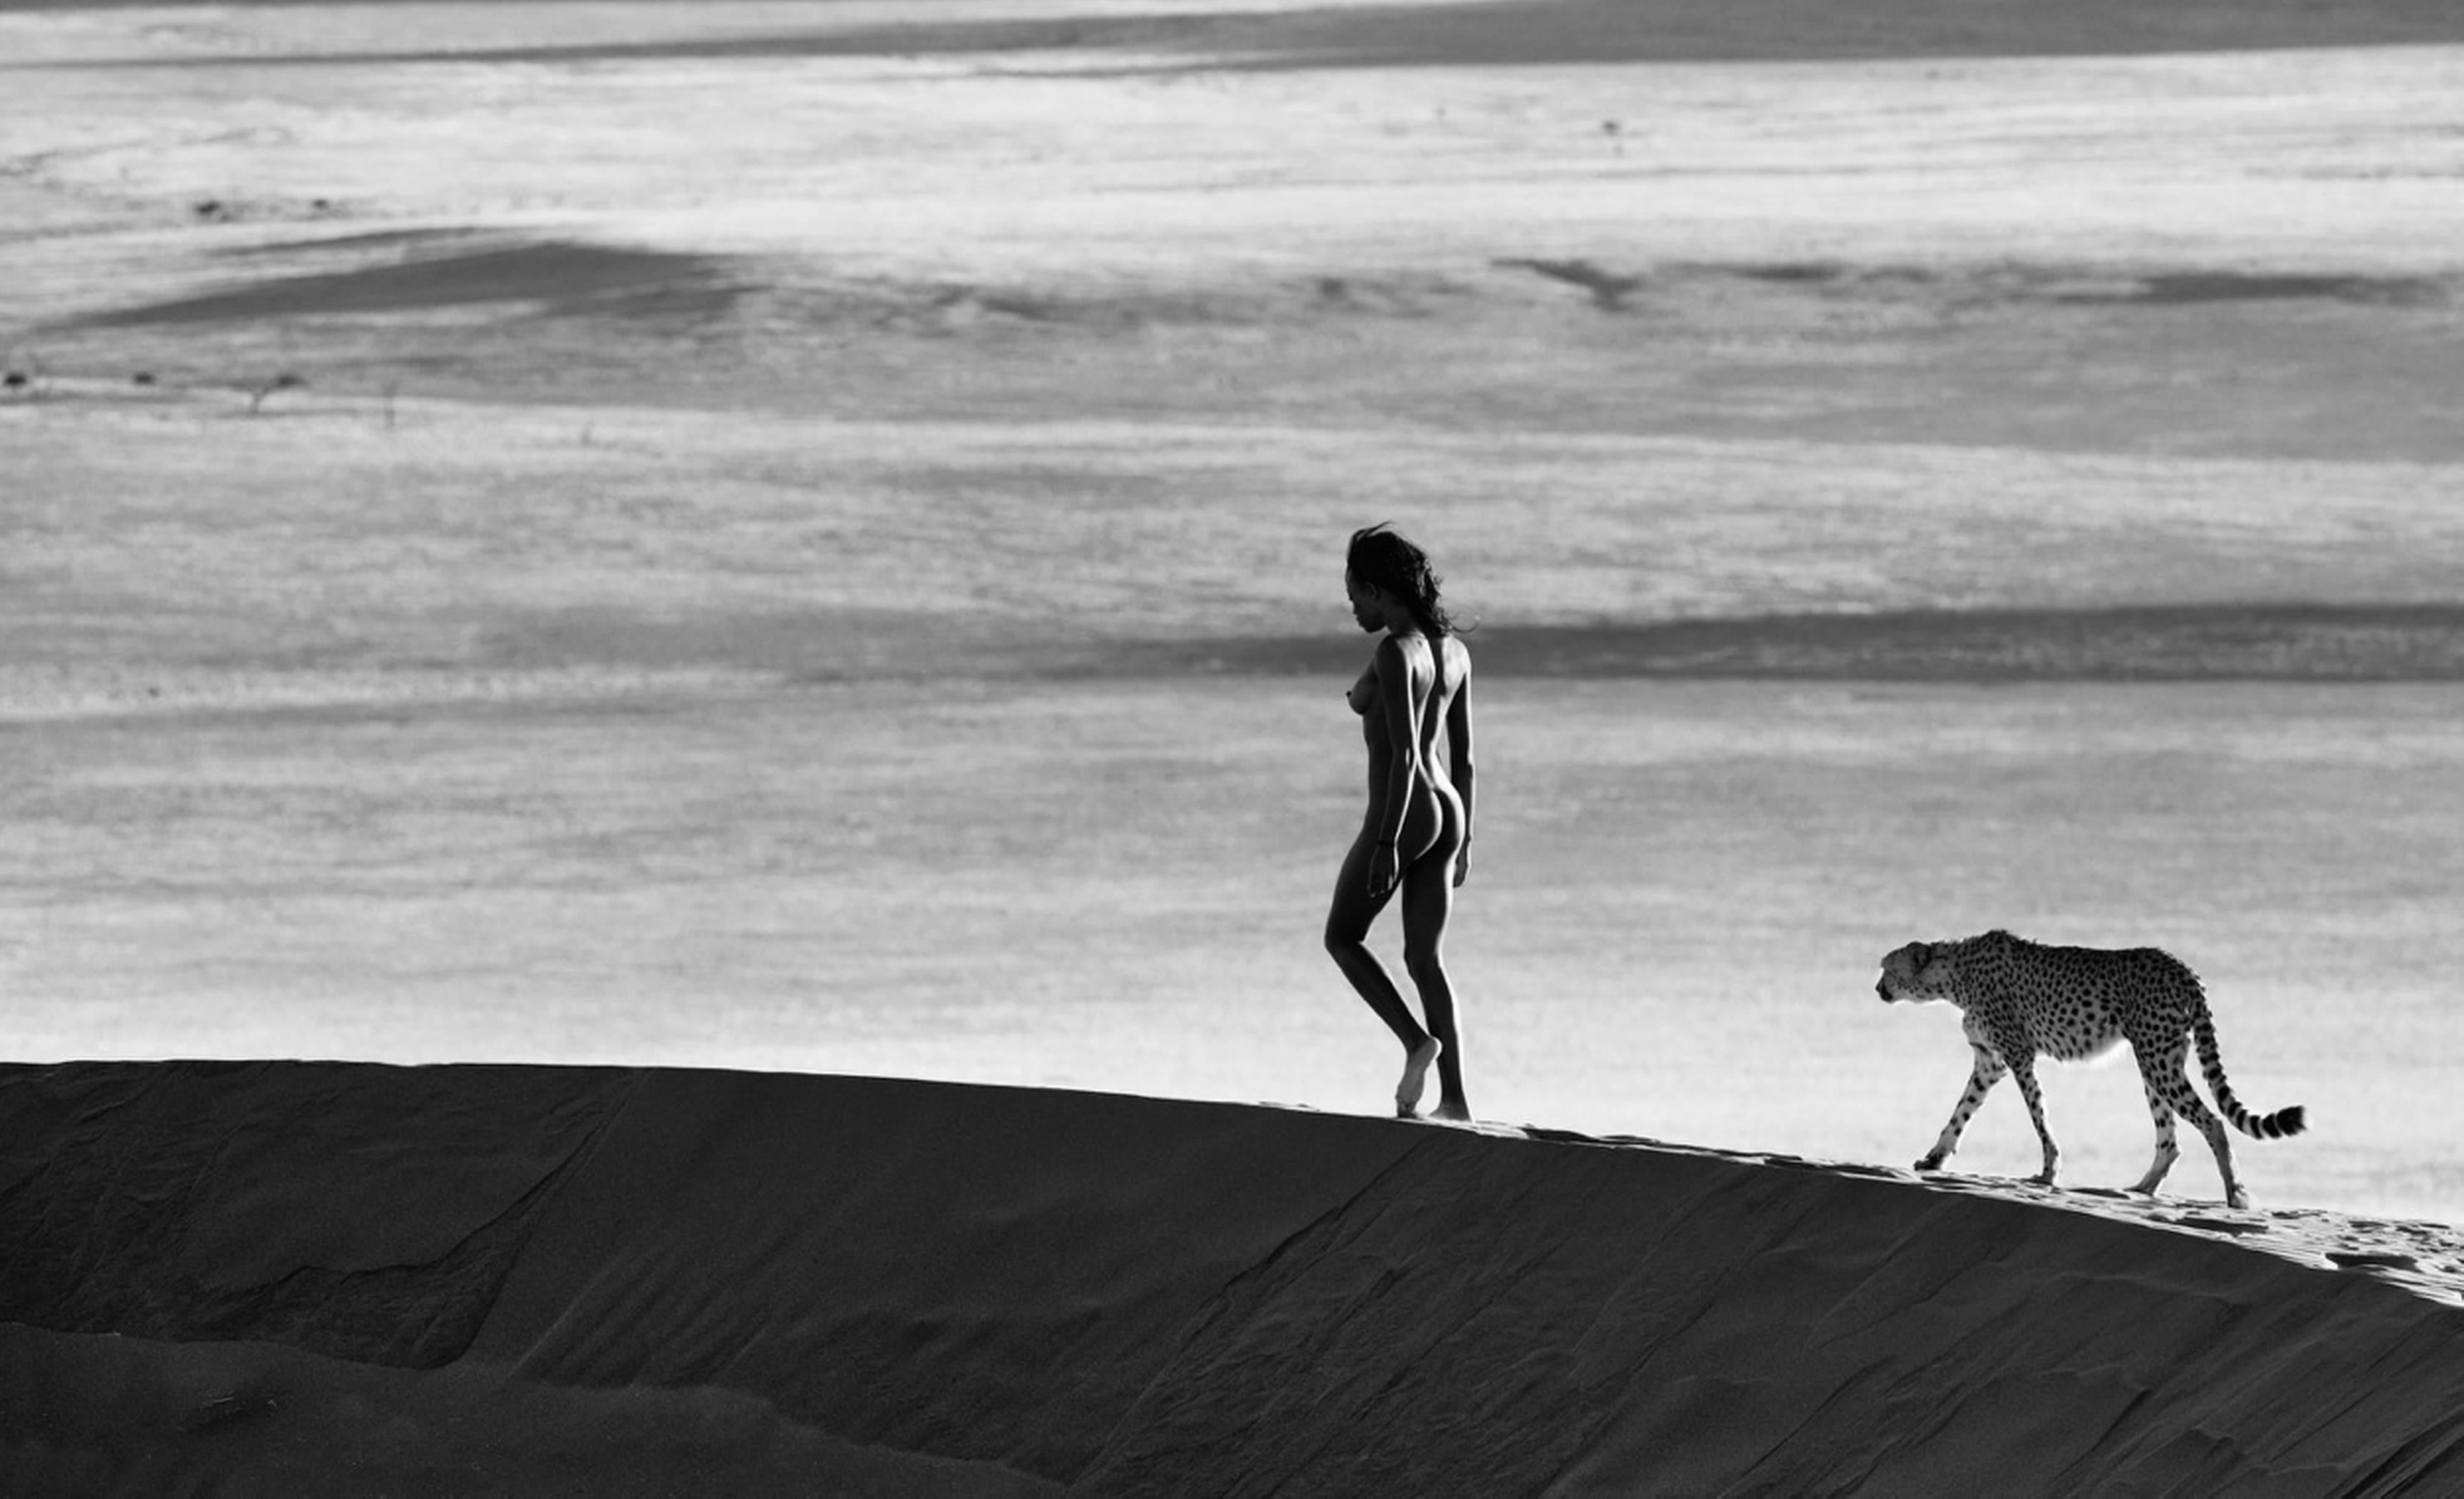 David Yarrow Black and White Photograph - Girls on Film